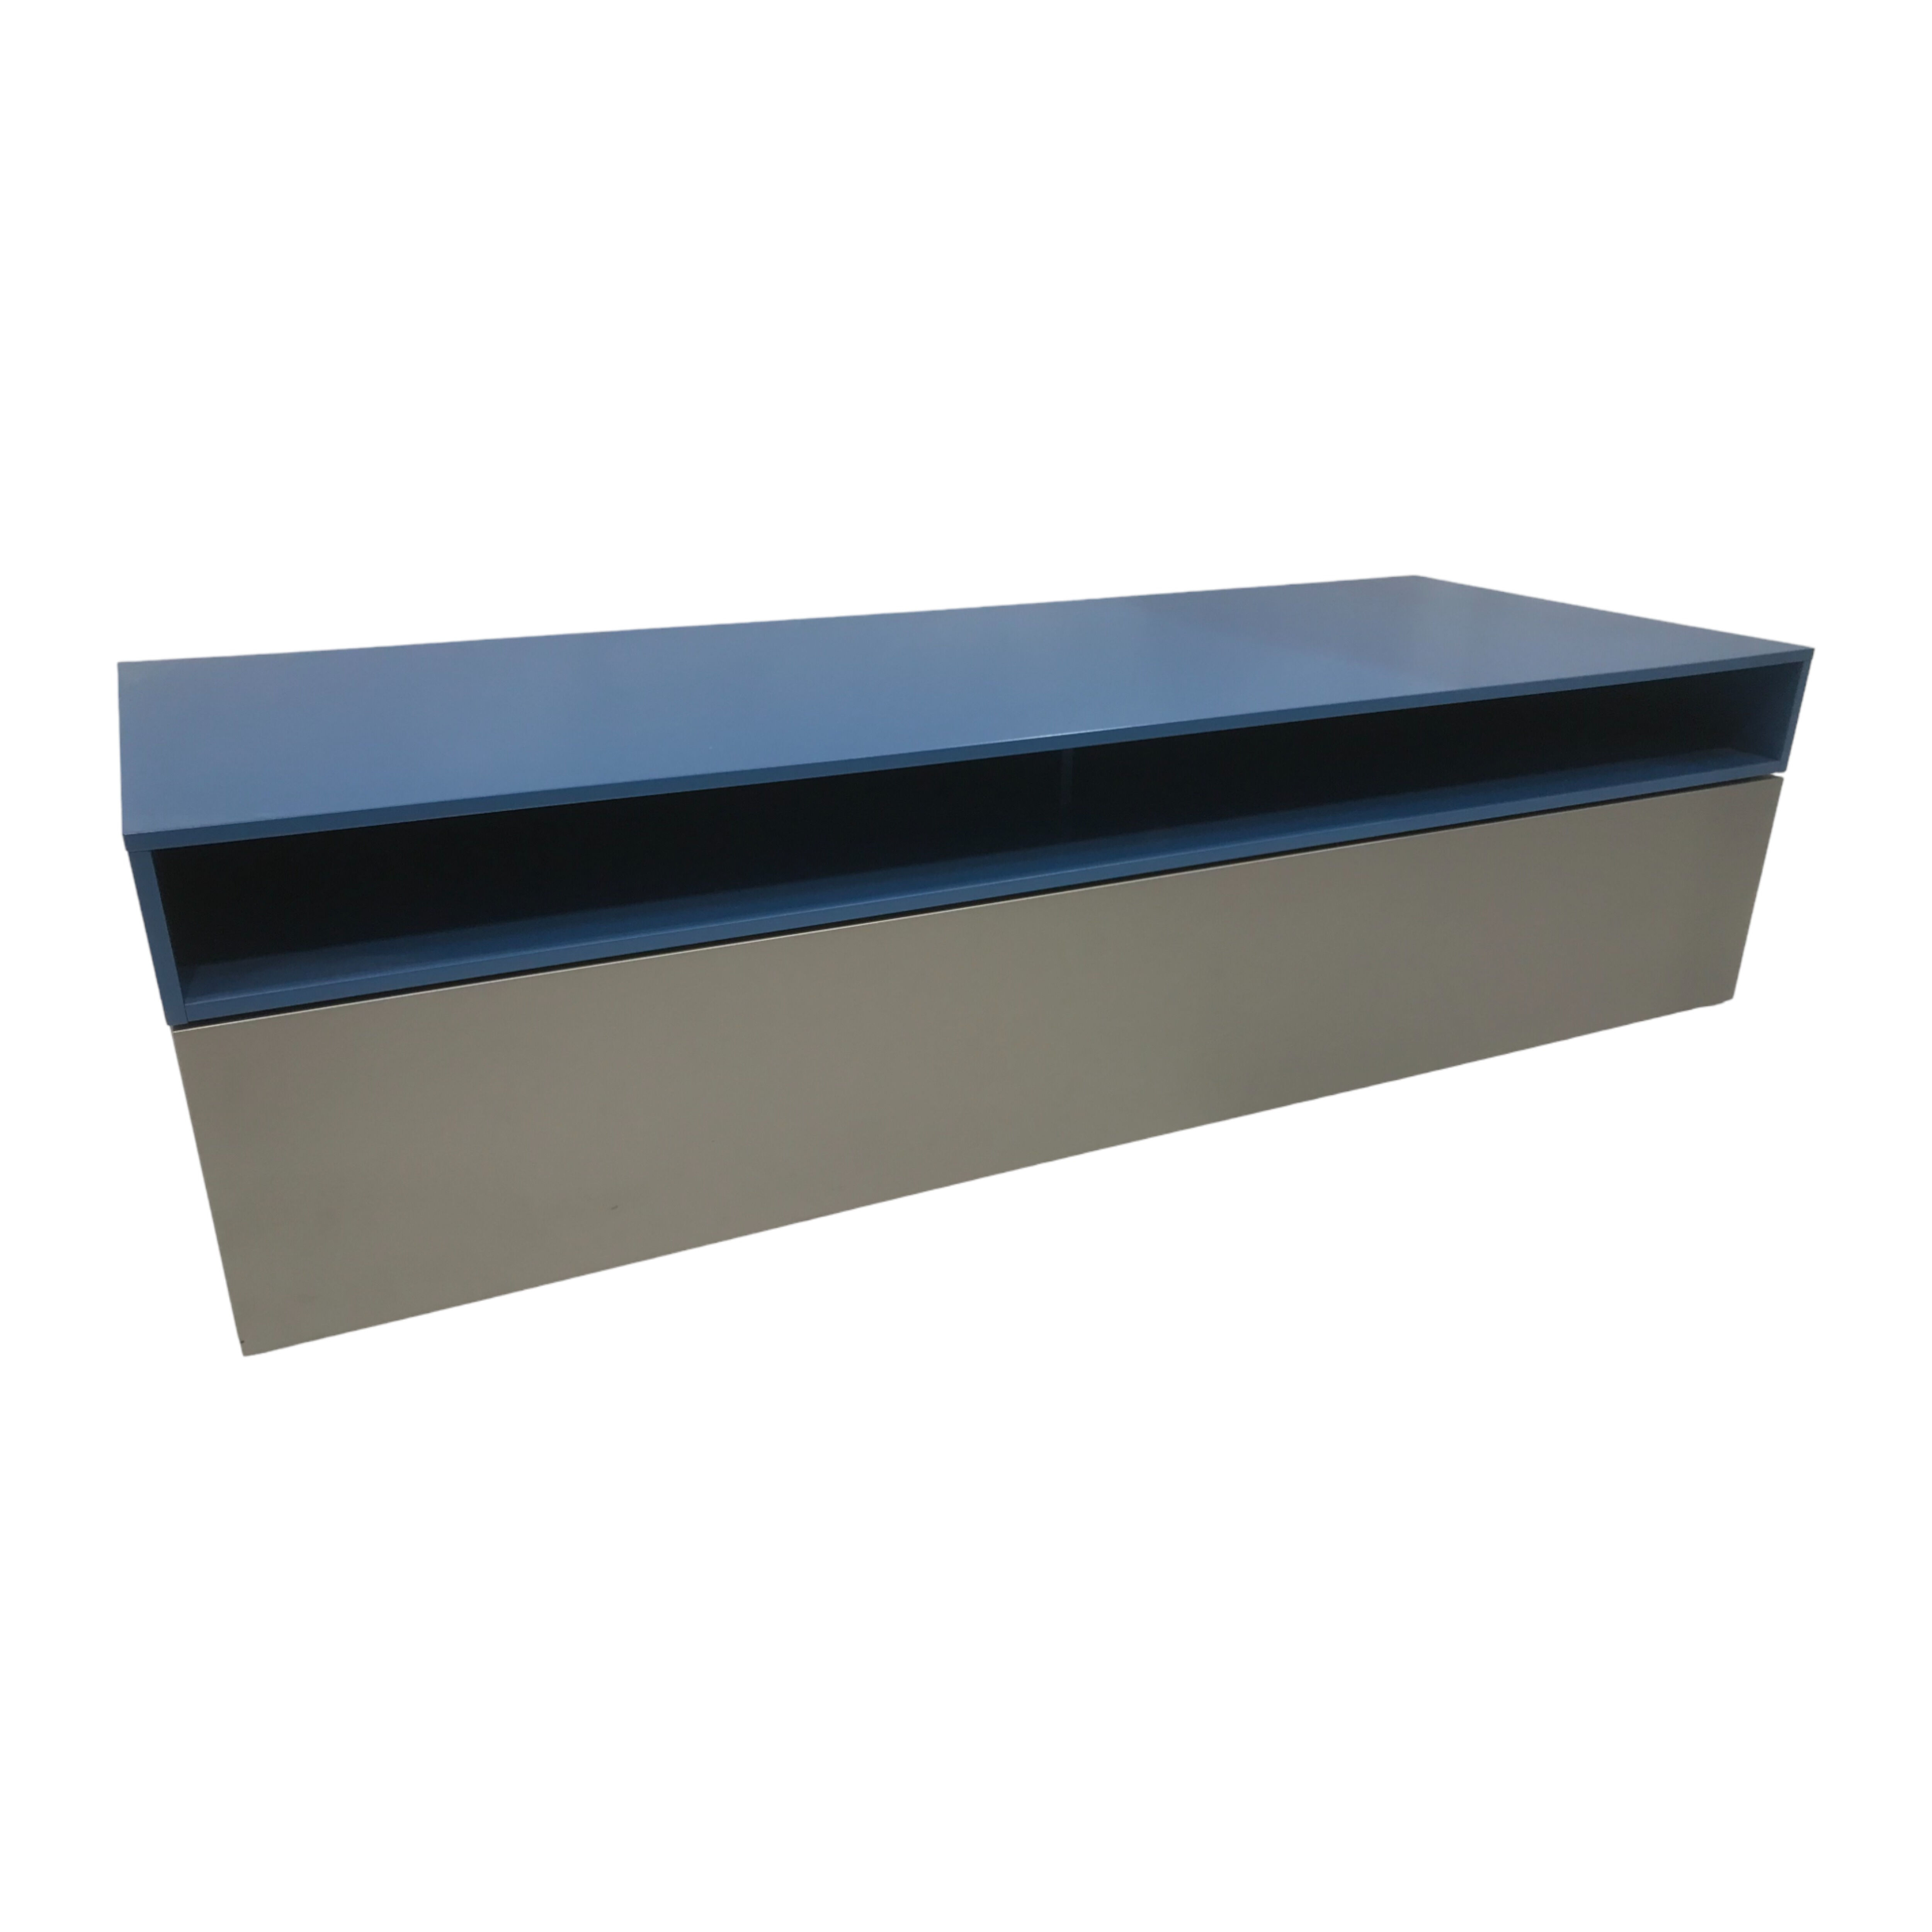 interluebke-sideboard-cube-change-lack-silbergrau-metallic-durchgehender-auszug-mf-0002712-001